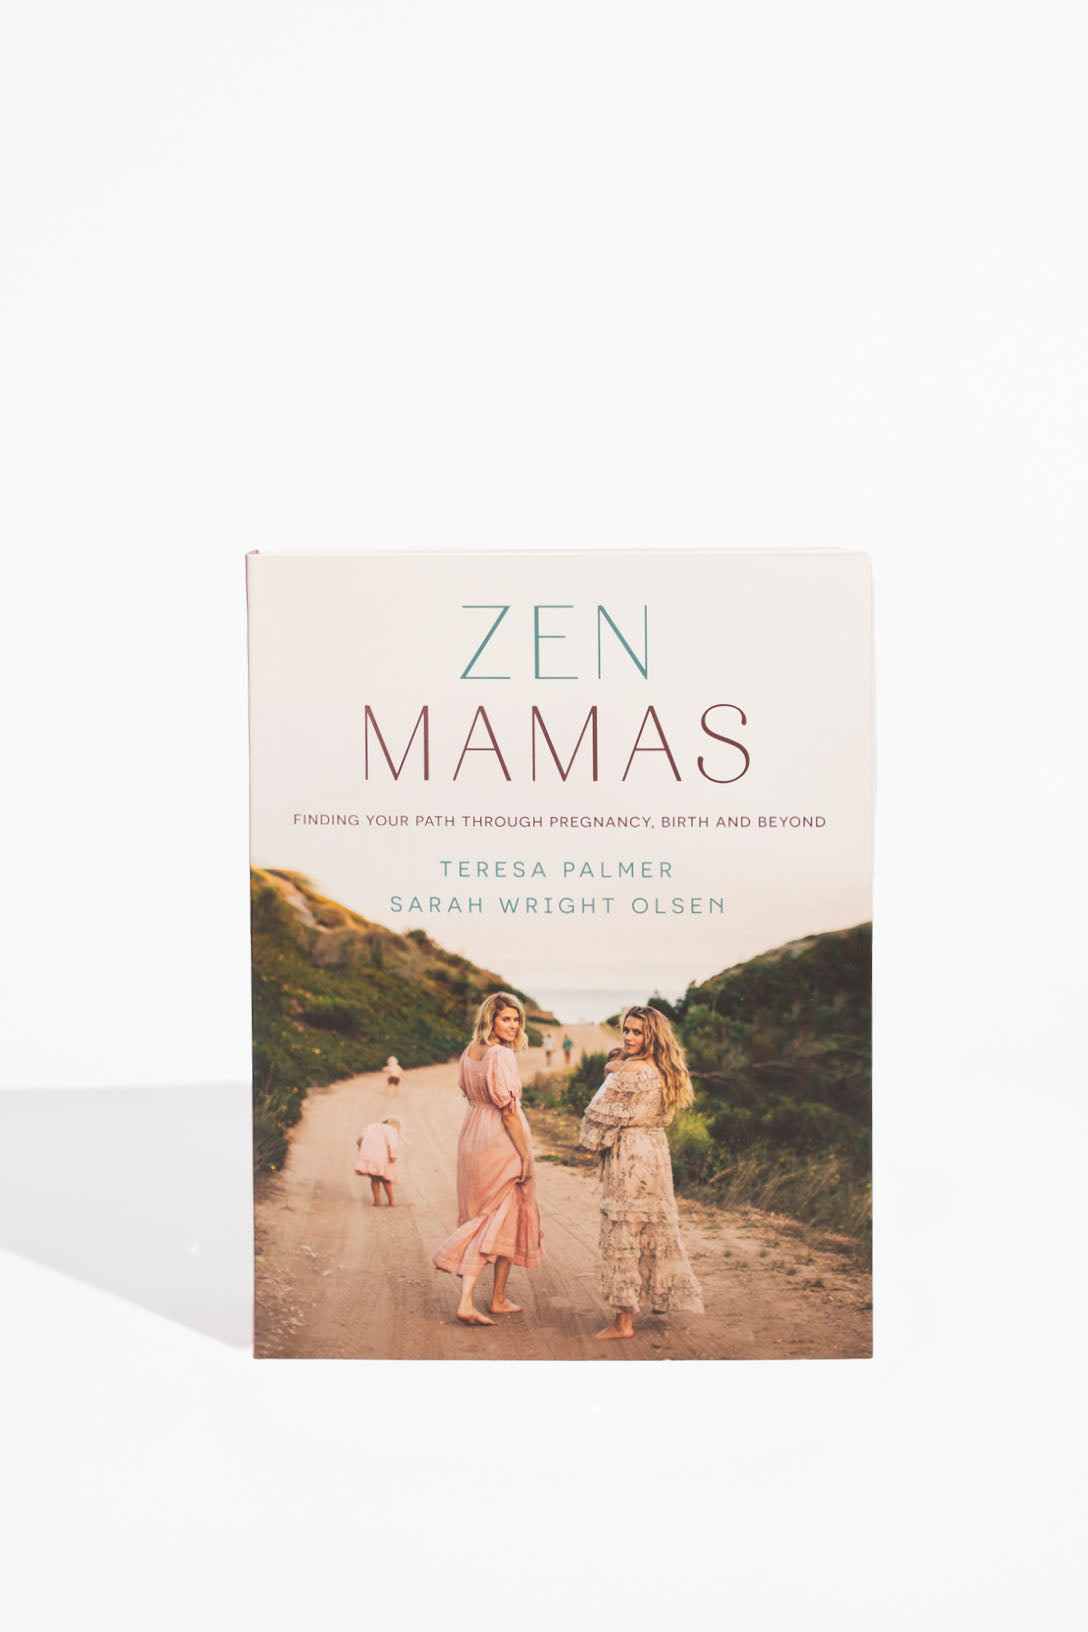 Zen Mamas